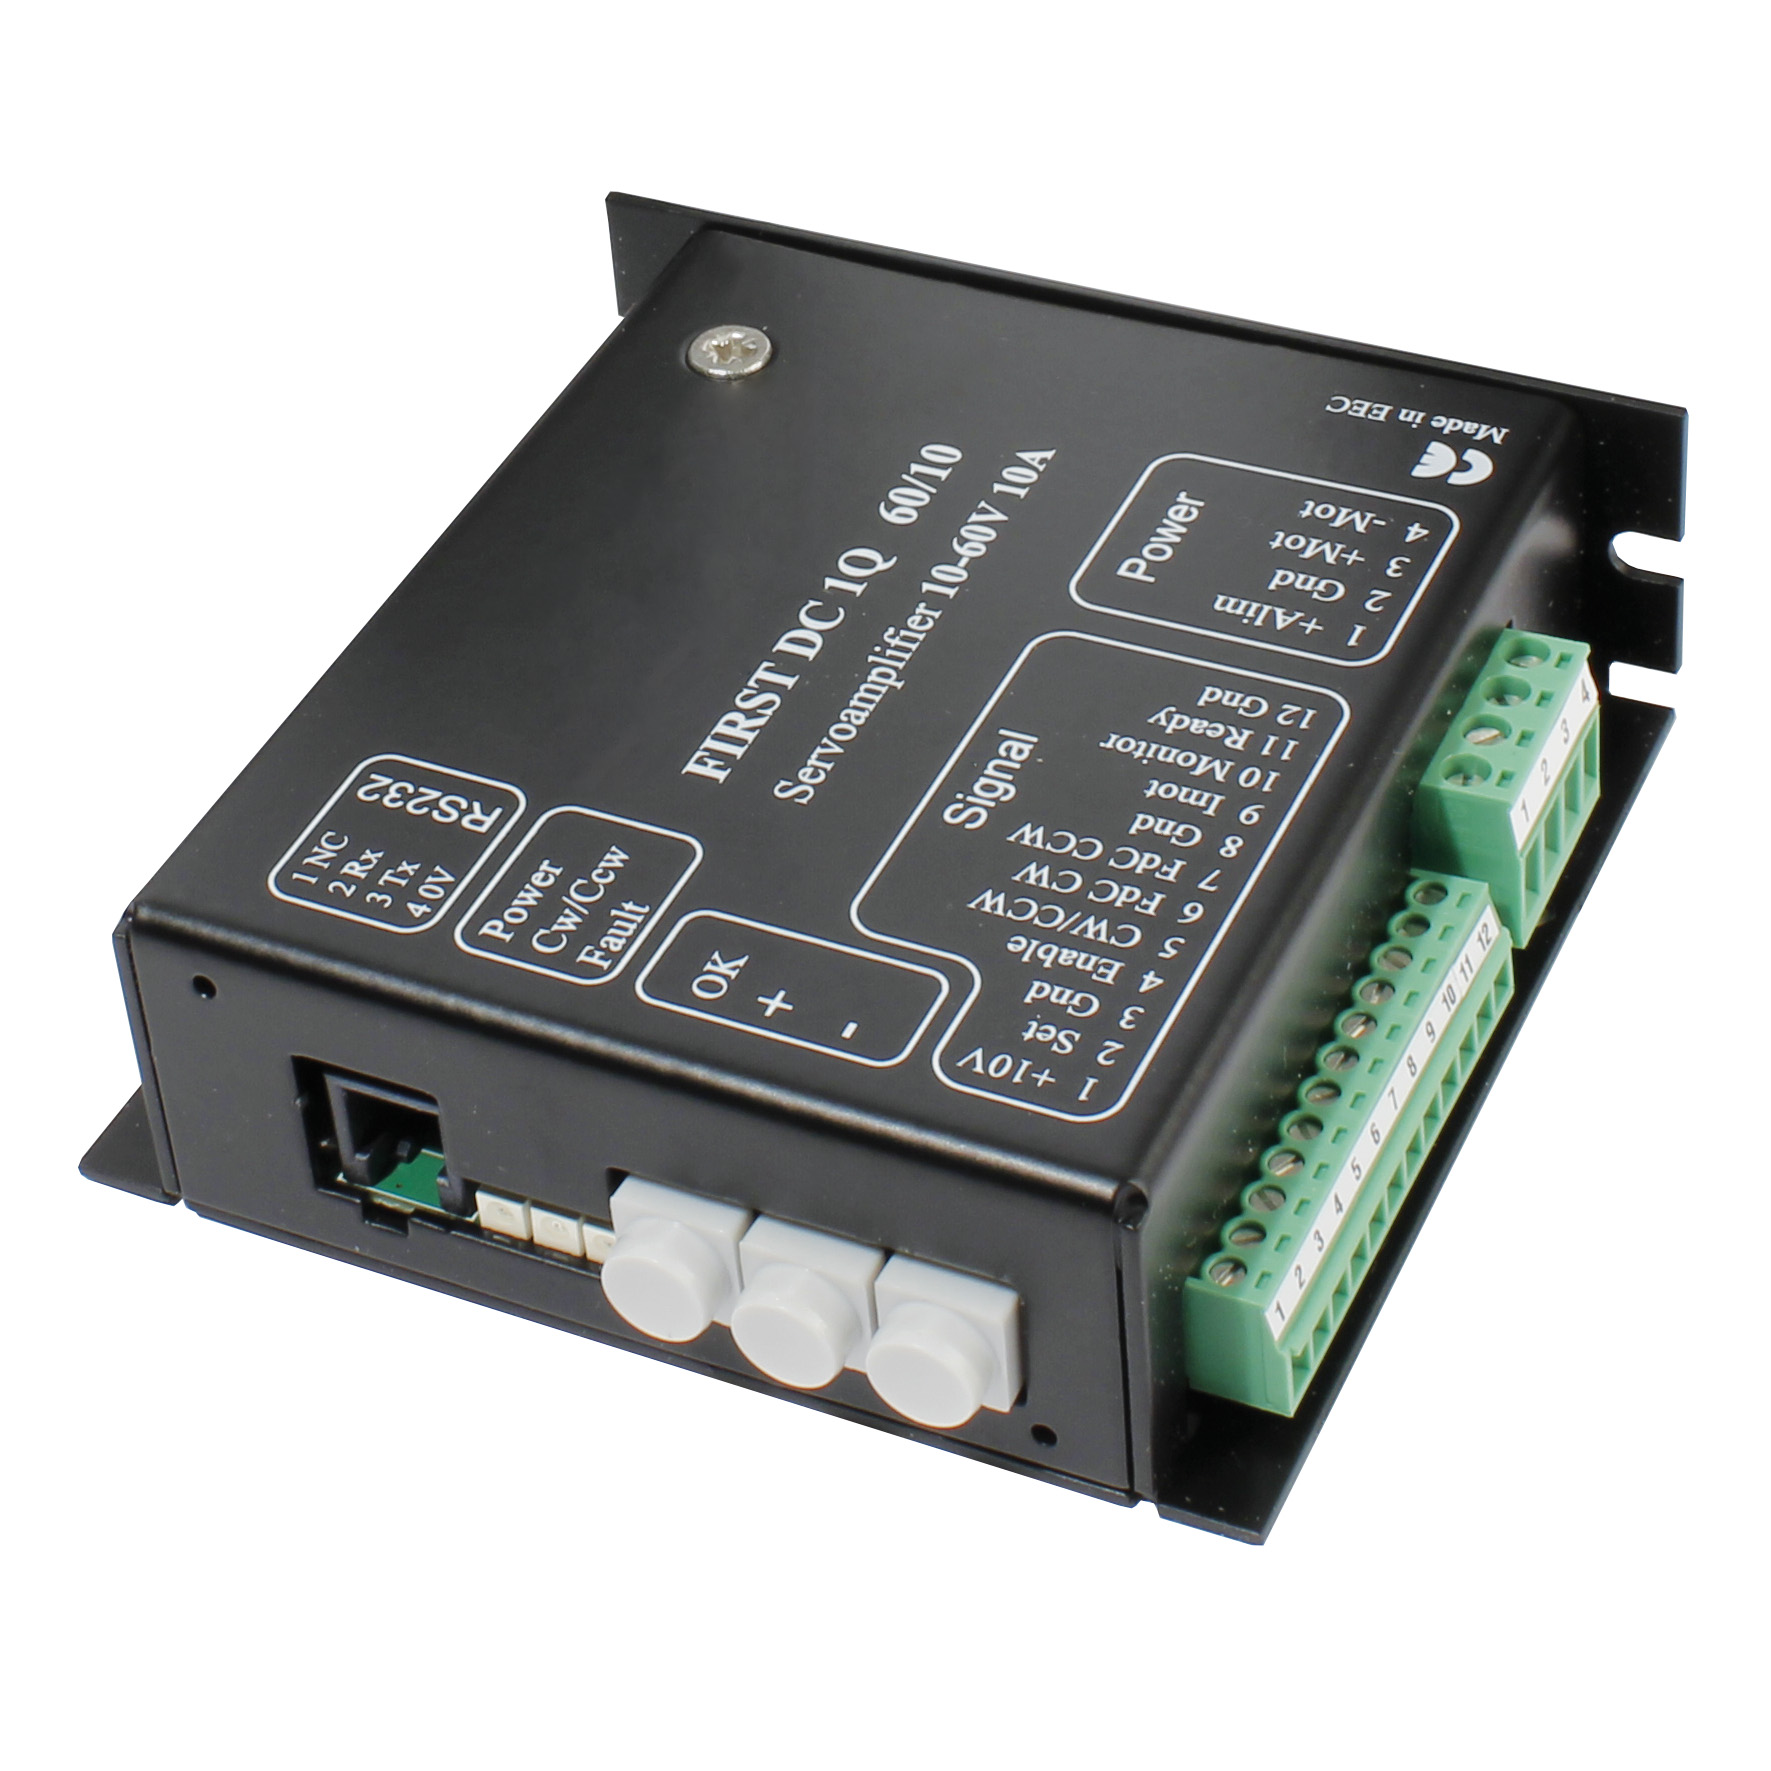 Speed controller 10A - 10 A - Electronic controller card quadrant - 